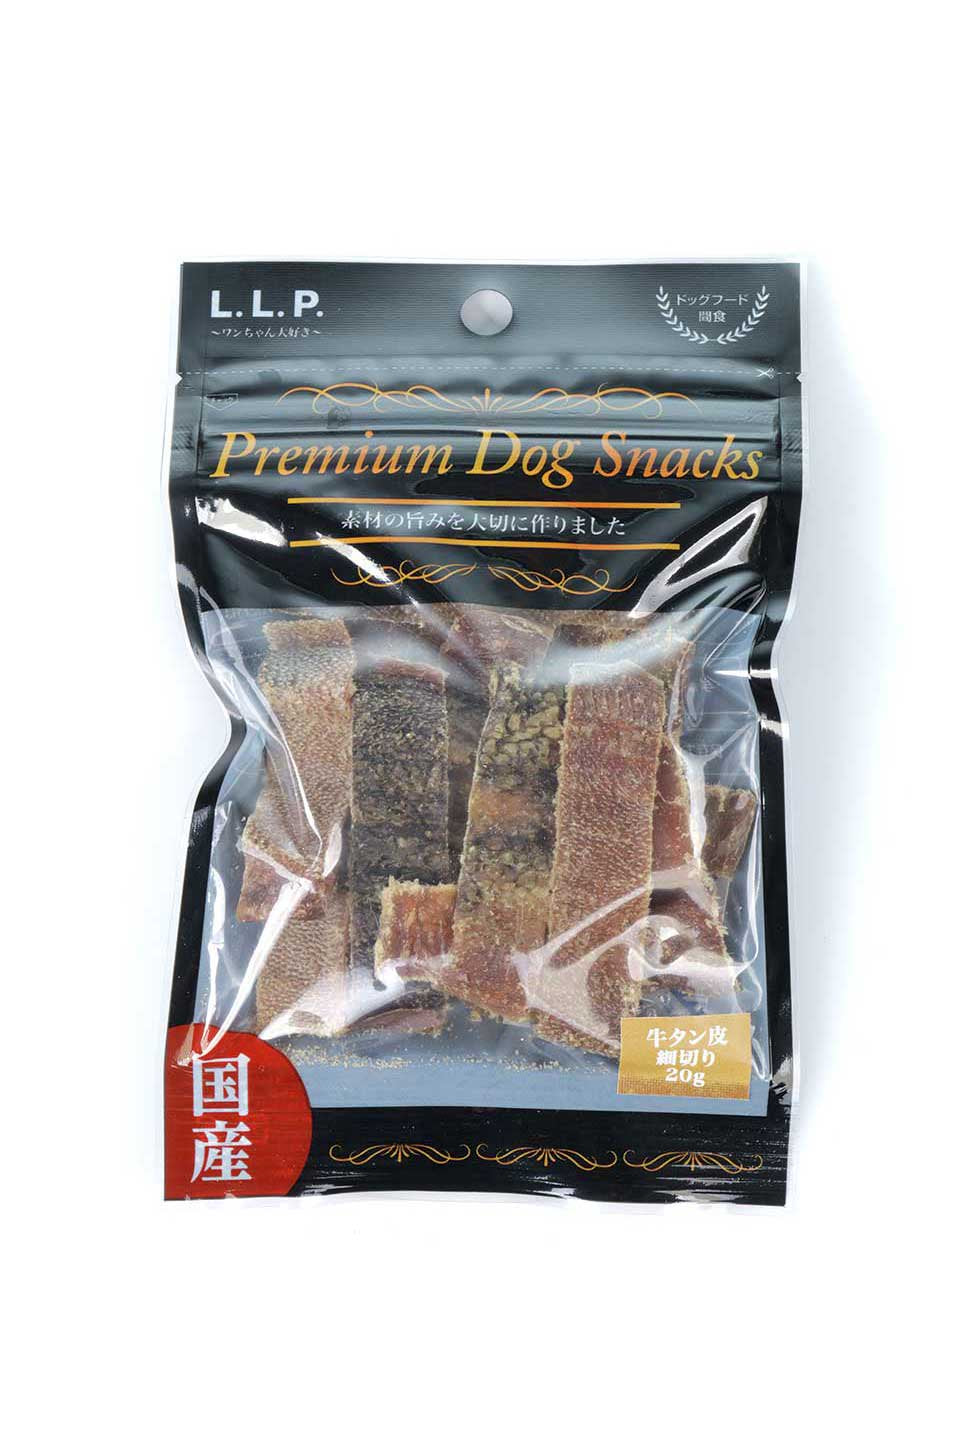 Premium Dog Snacks / Beef Tongue Shredded Jerky 牛タン皮細切り